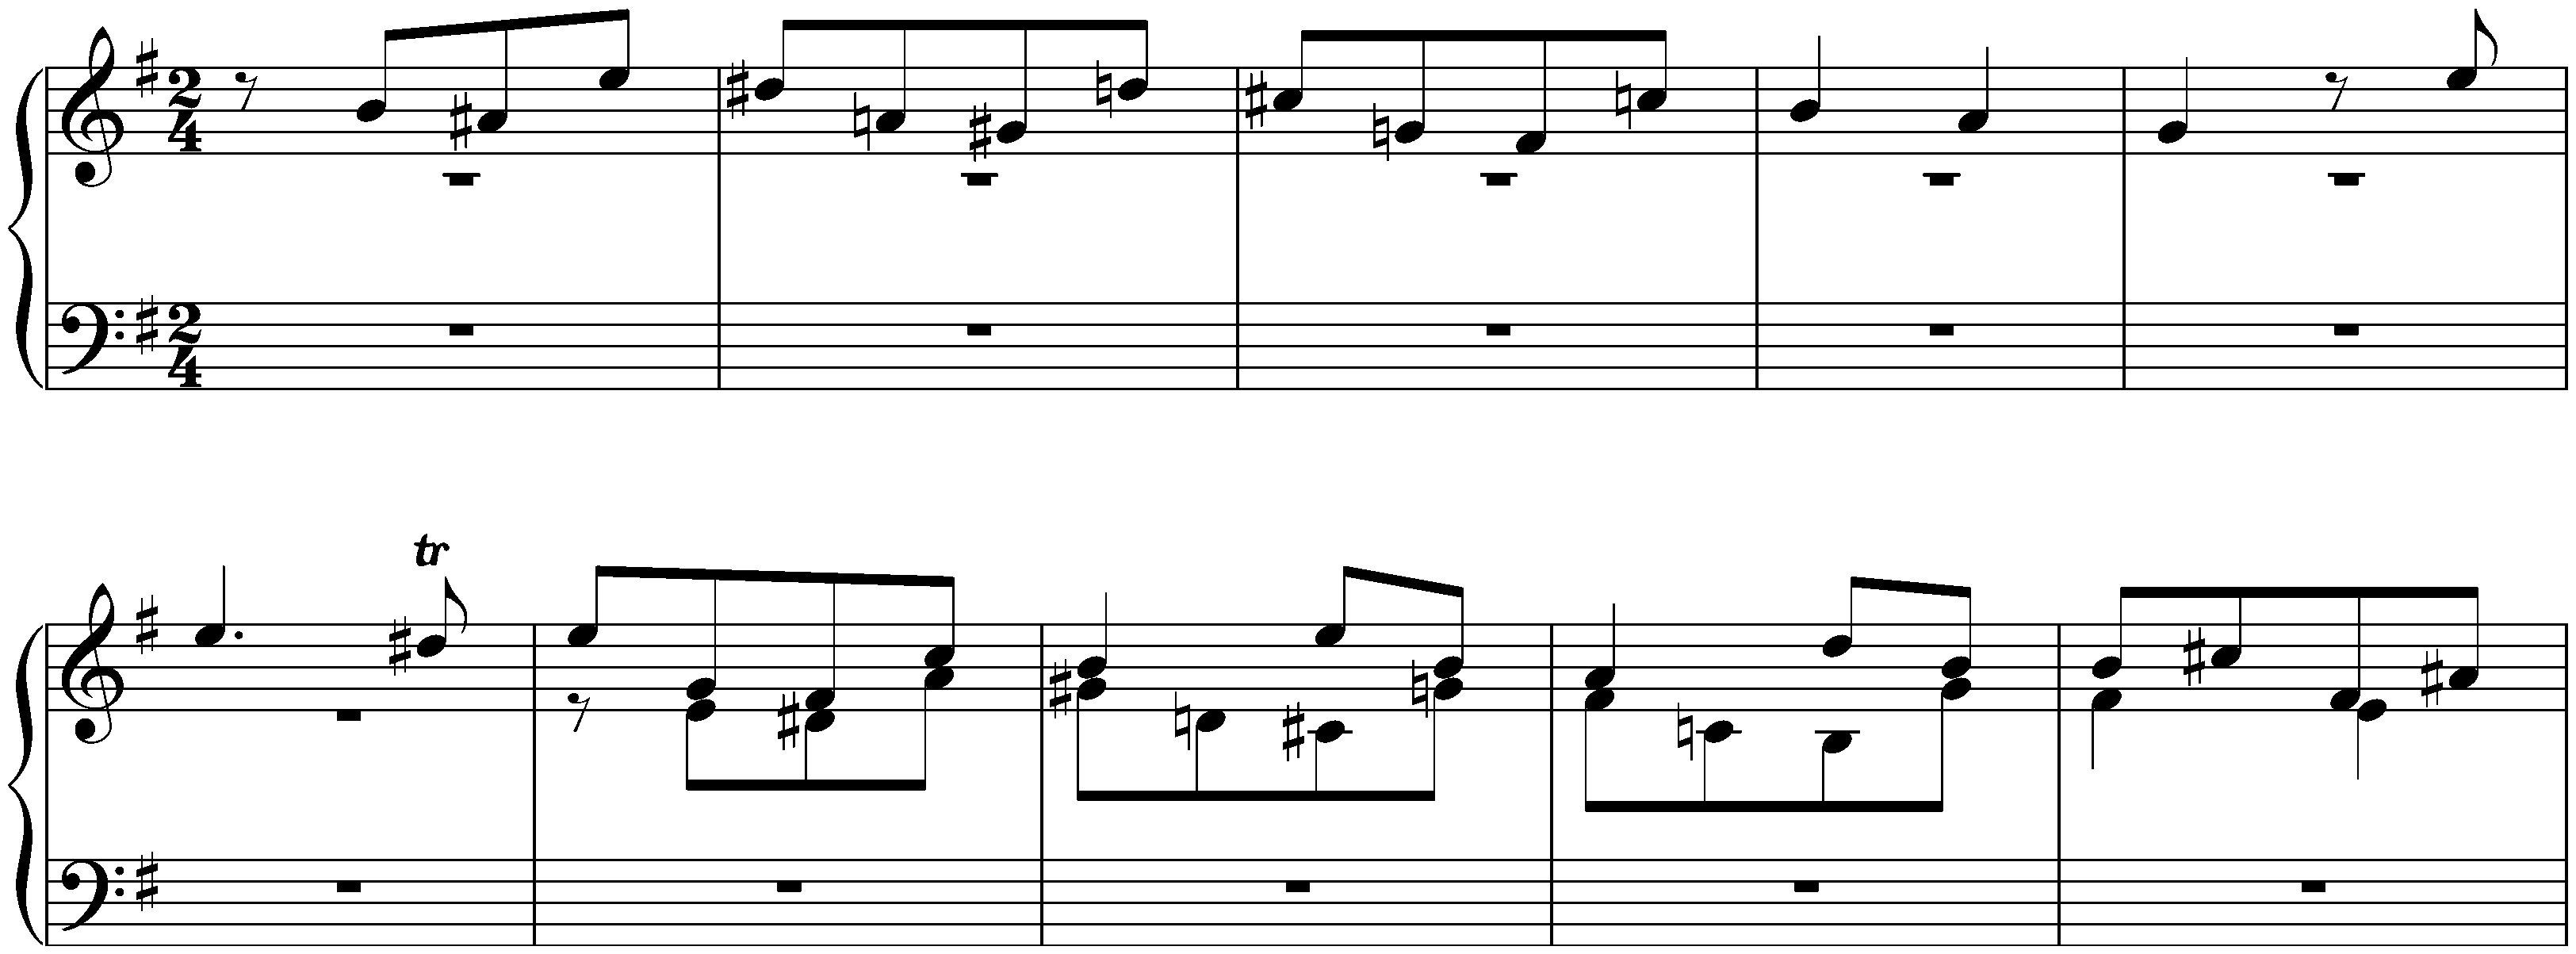 Fugue in E minor, BWV Anh. 95